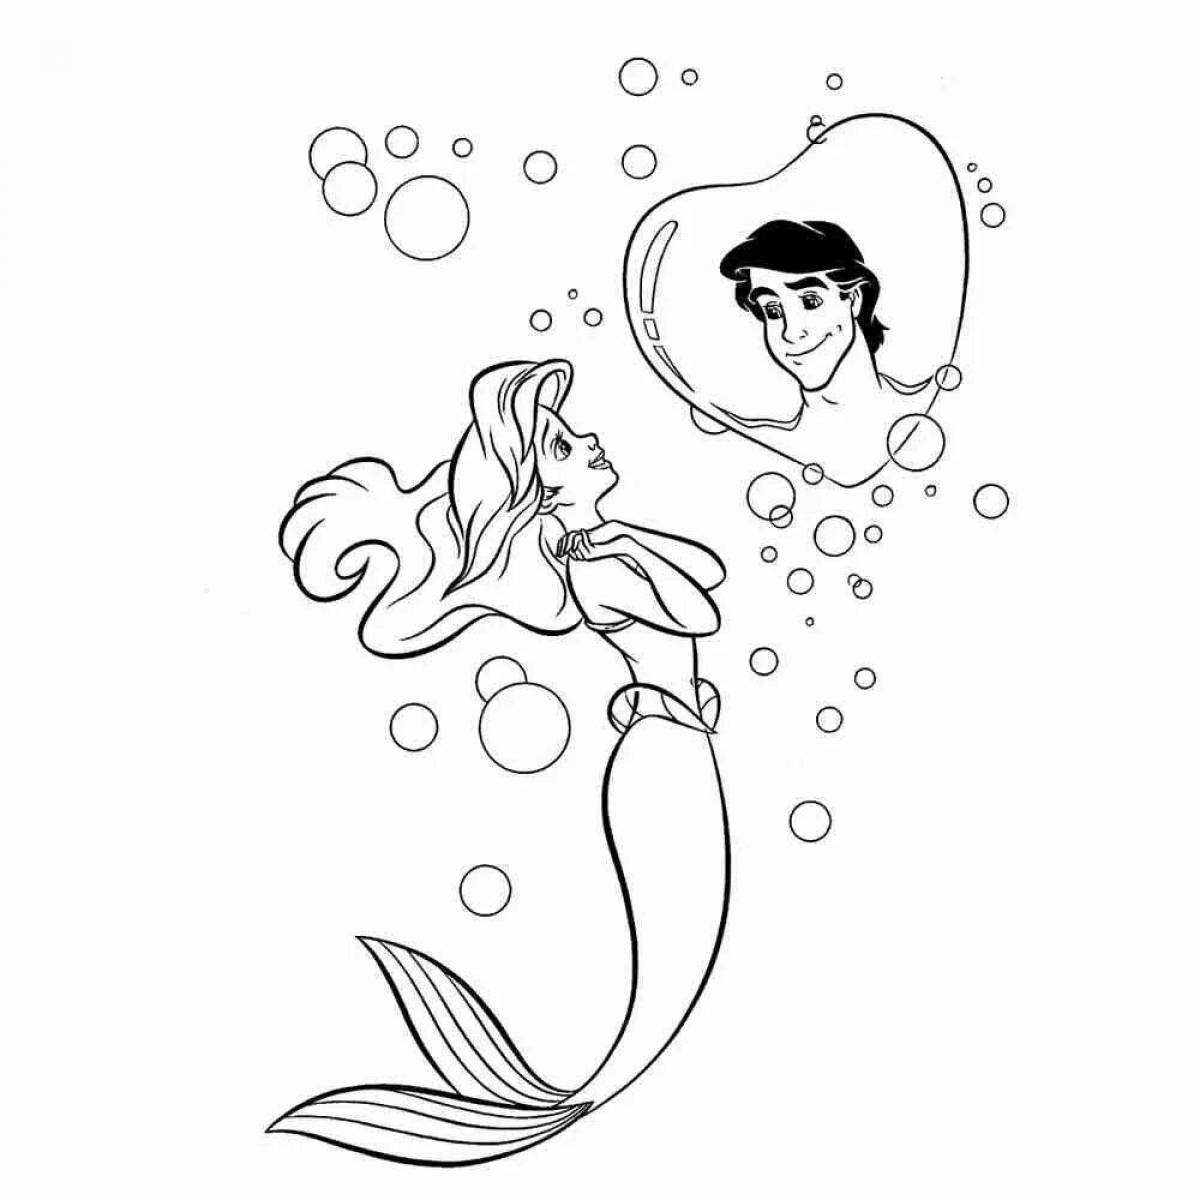 Dreamy mermaid princess coloring book